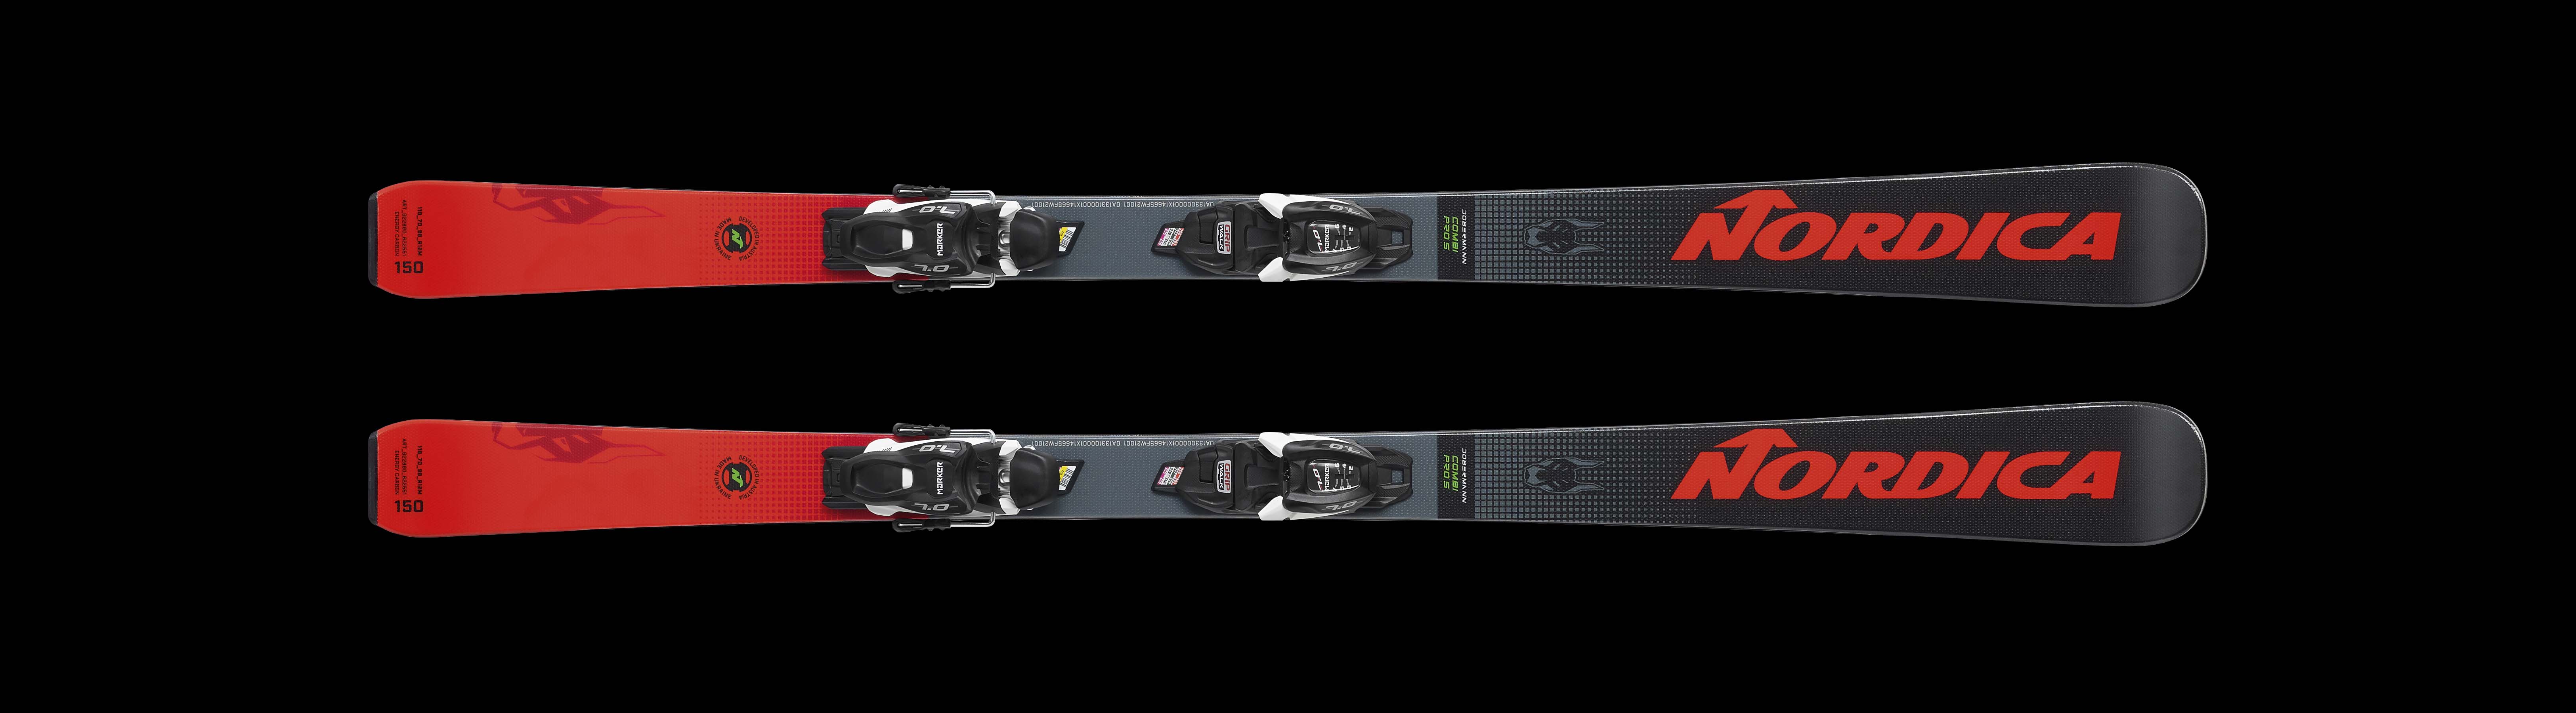 Qualité A fixations 140 cm Nordica Ski occasion junior Nordica Team GT 